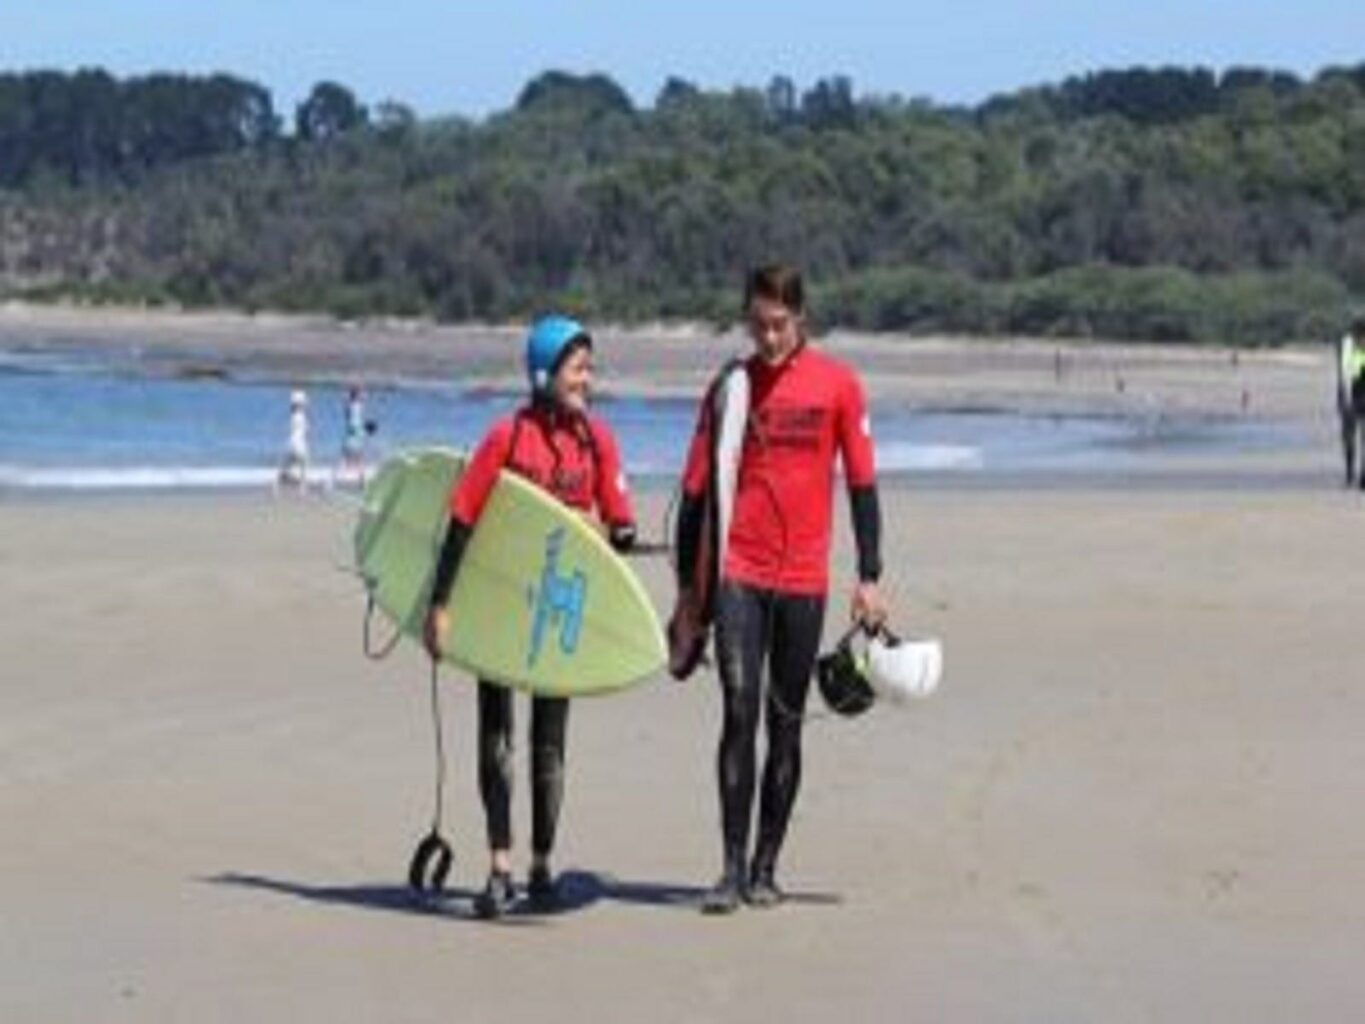 East Coast Surf School - walking on the beach holding boards.